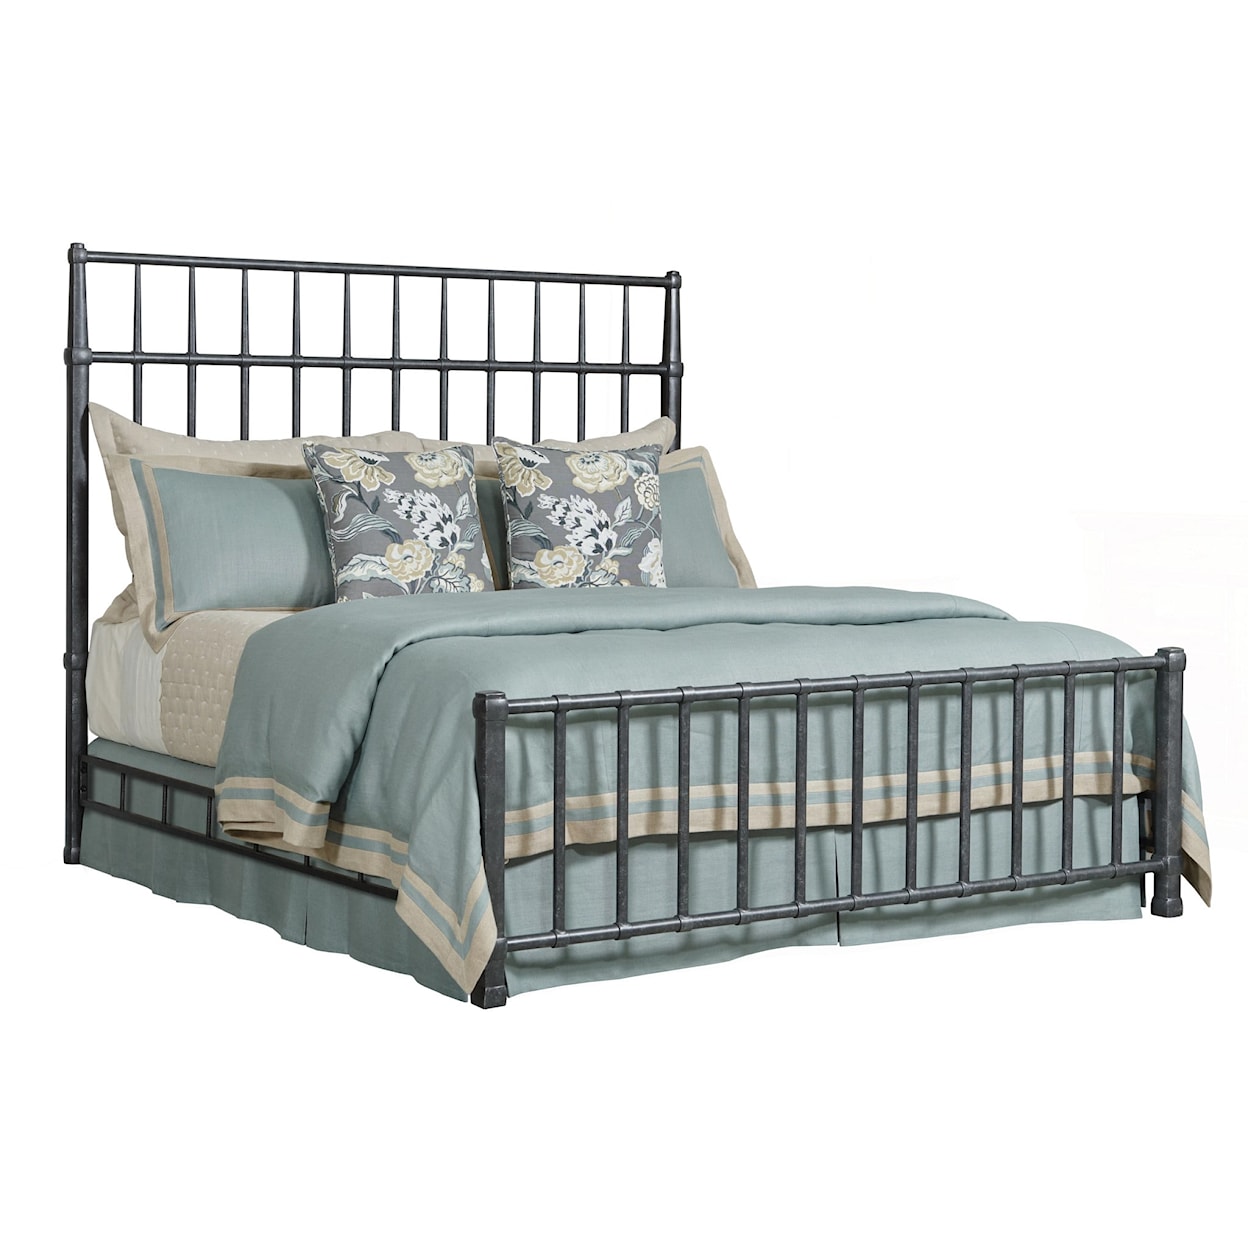 Kincaid Furniture Ansley Sylvan Queen Metal Bed Complete